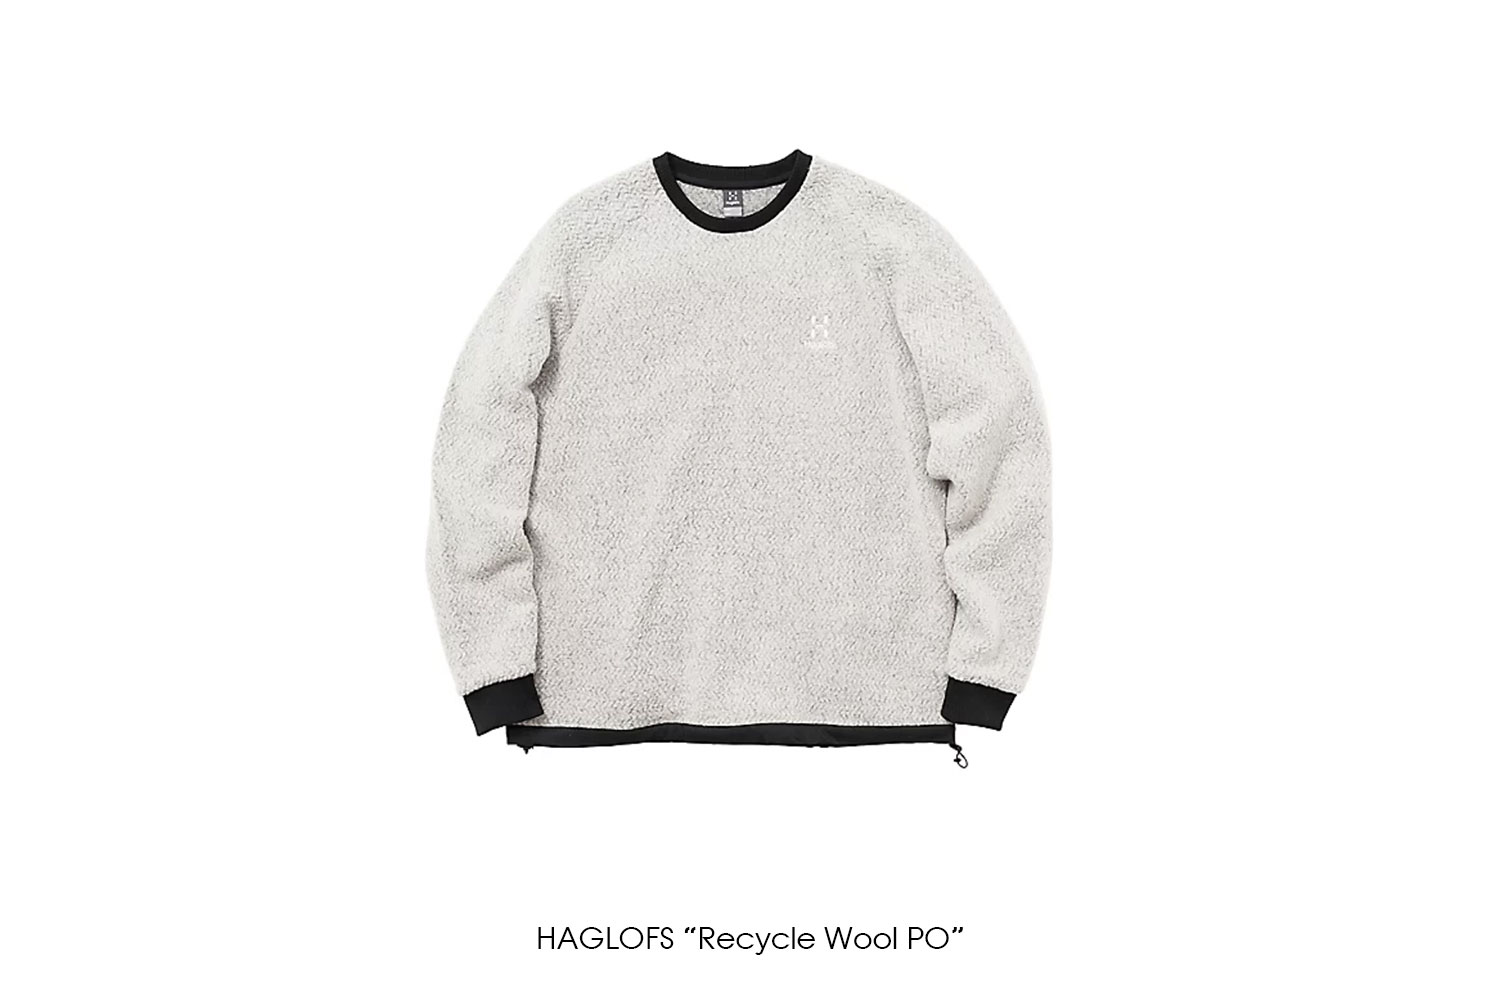 HAGLOFS "Recycle Wool PO"